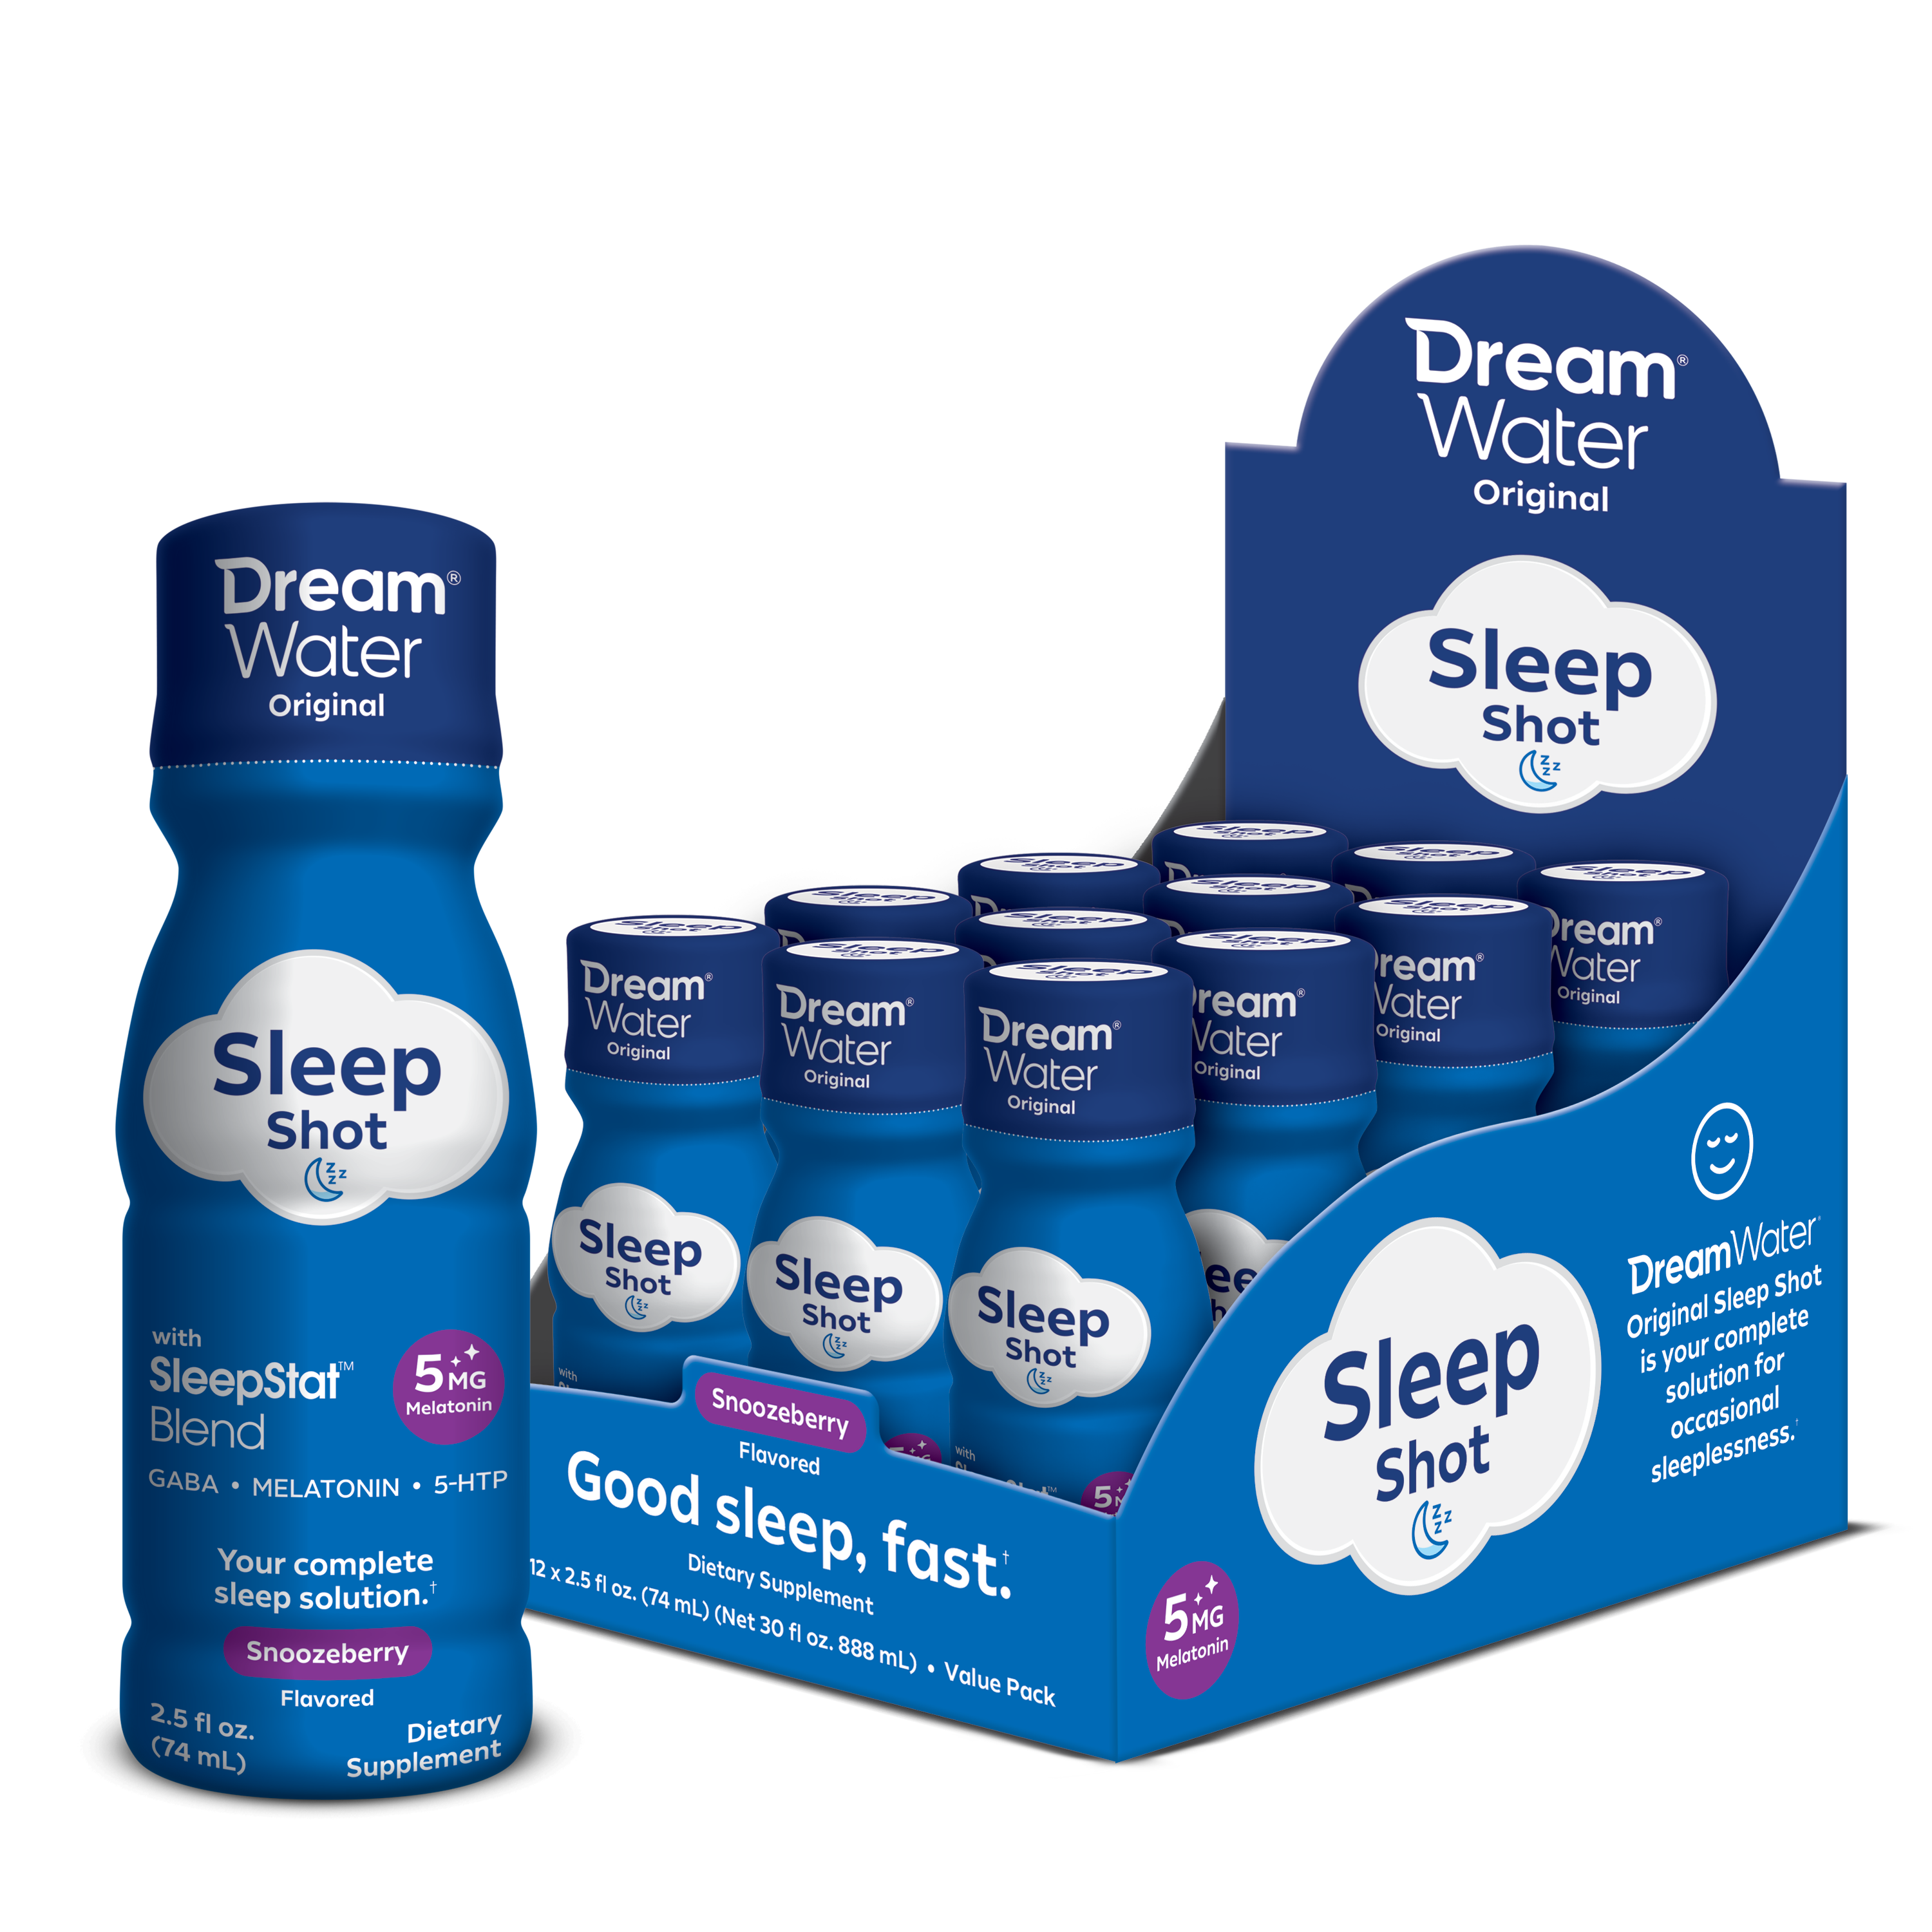 image-Dream Water Sleep Aid Shot - Snoozeberry Flavor - 12 pack